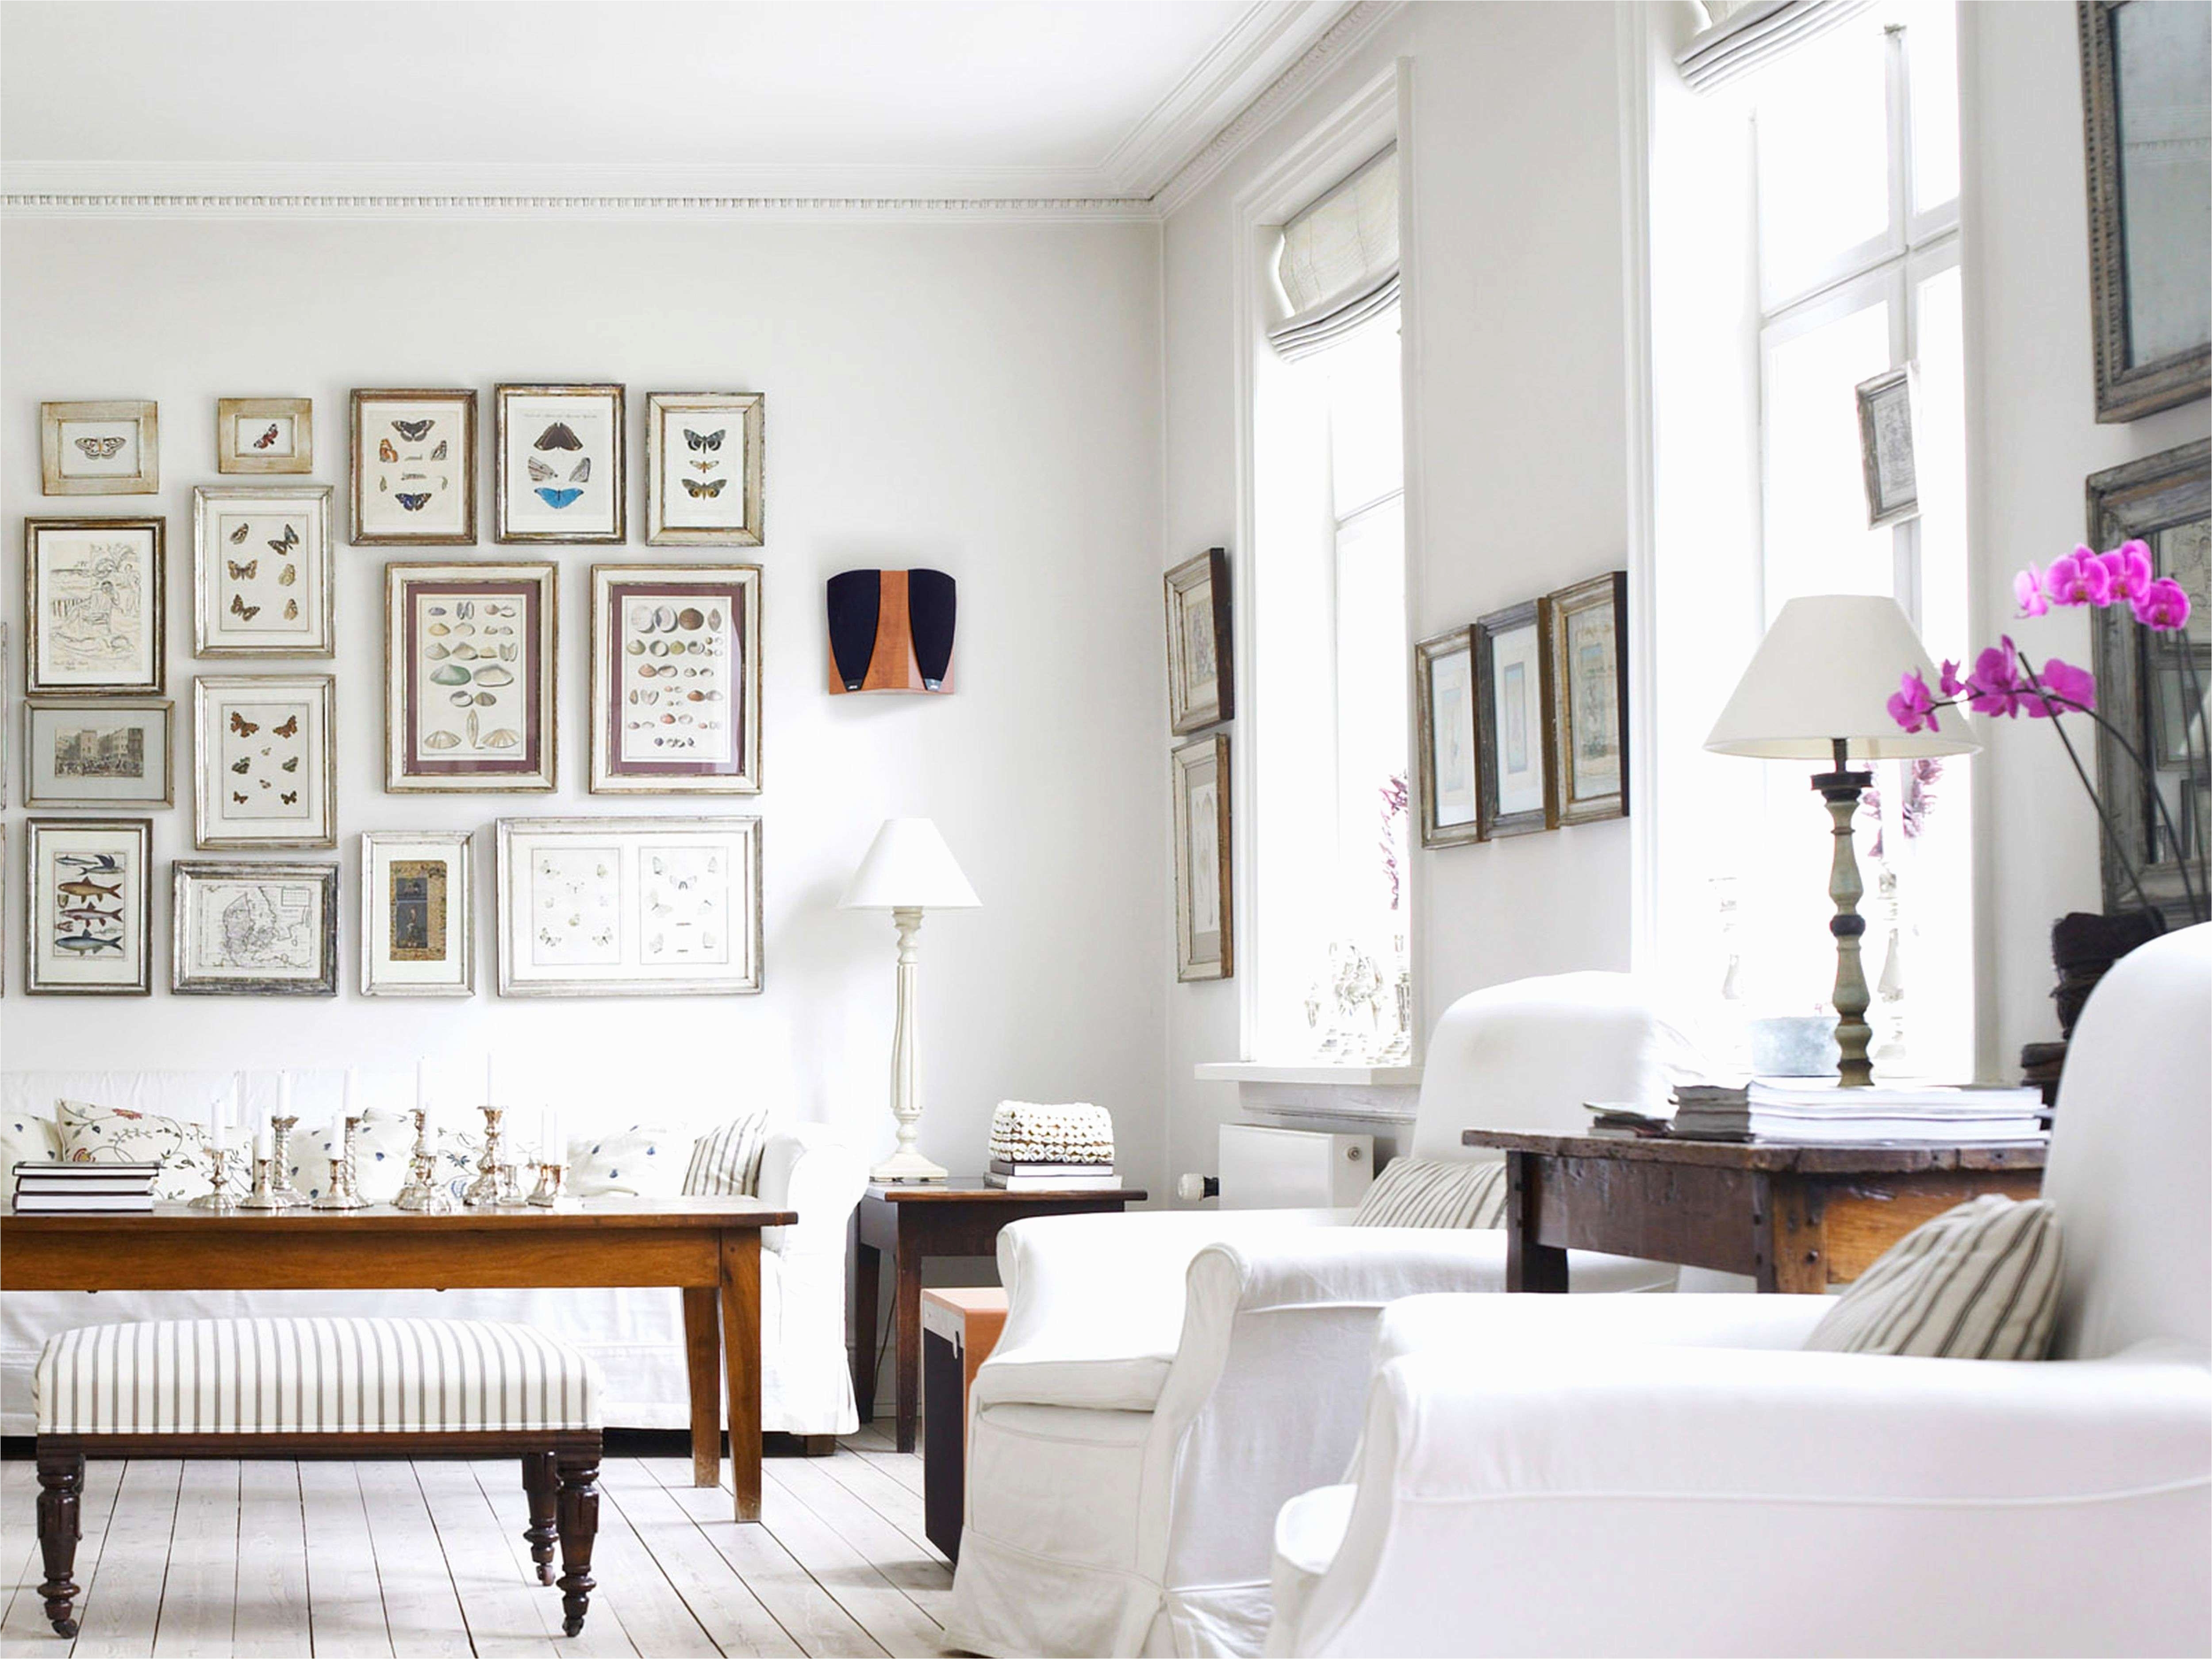 astounding white kitchen decor and kitchen light cover best 1 kirkland wall decor home design 0d design